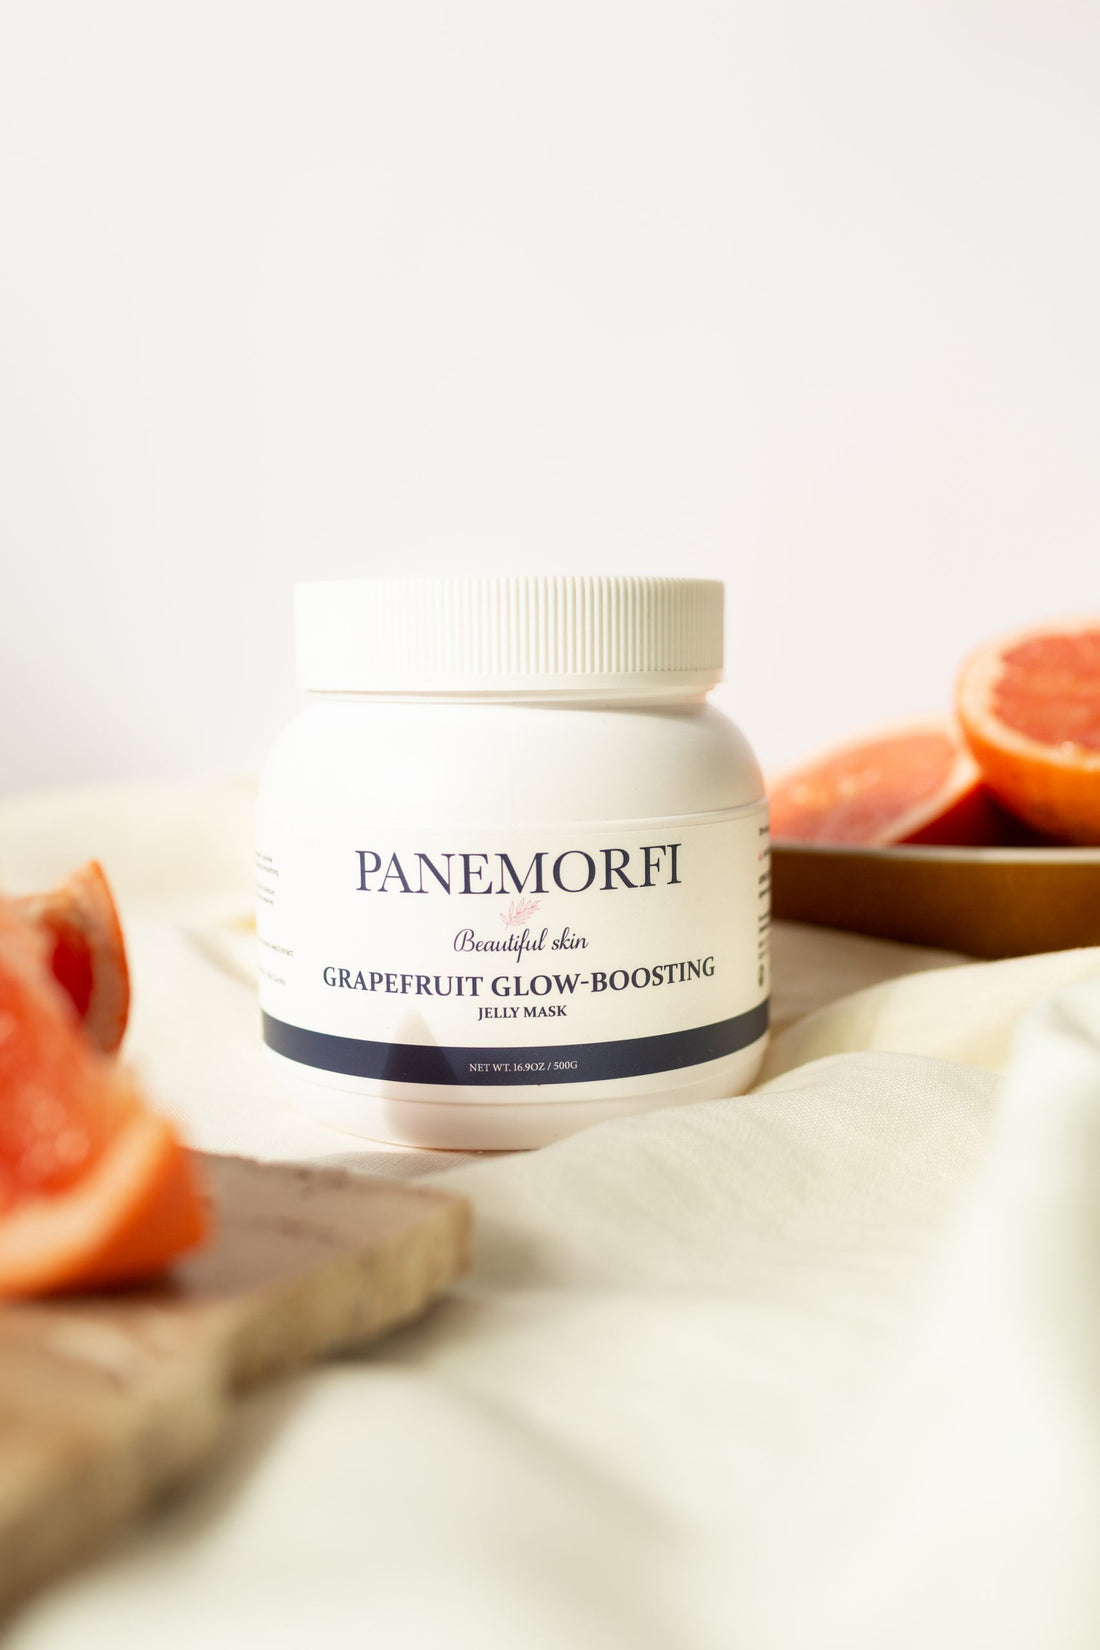 PANEMORFI - Grapefruit Glow-Boosting Jelly Mask, 500g